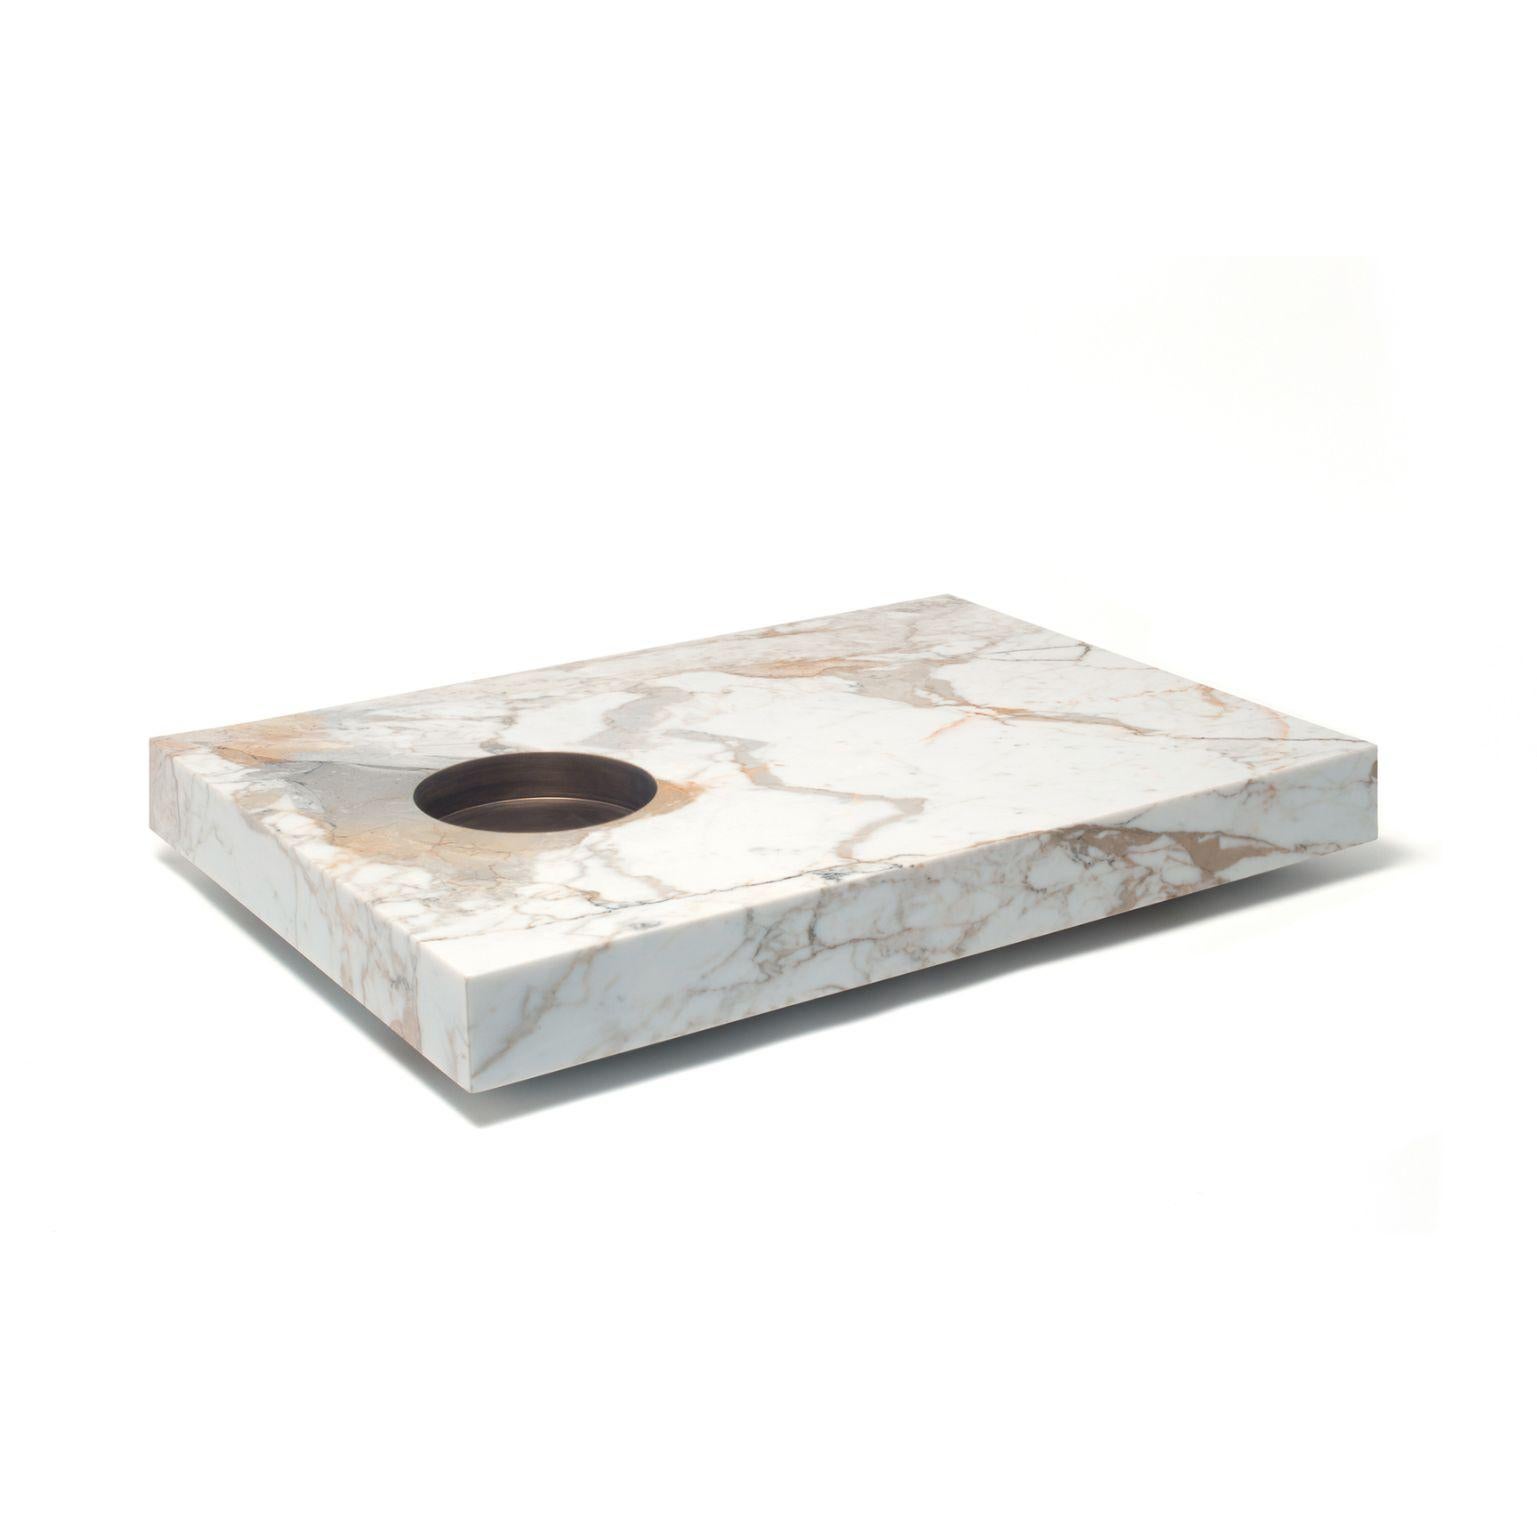 Scoop Fumo table by Stefano Belingardi Clusoni
Dimensions: 100 x 70 x 13 cm
Materials: Calacatta oro, brass, wood

